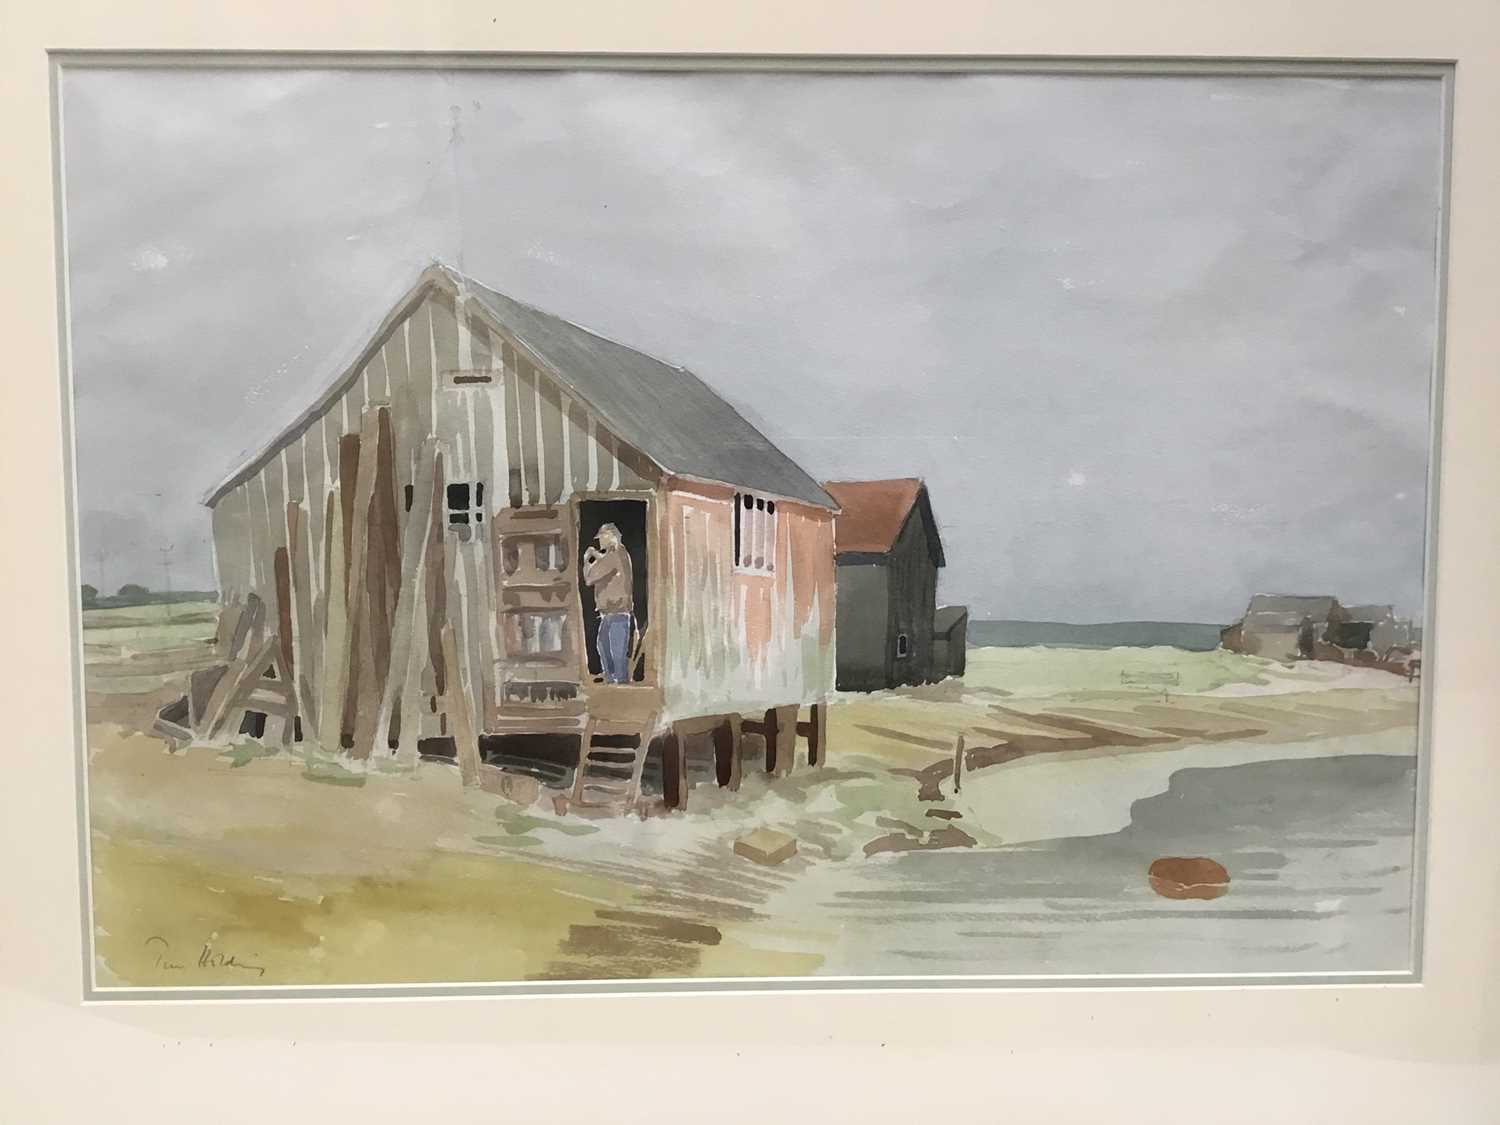 Lot 136 - Tim Holding (b. 1940) watercolour, Fisherman's Hut, Walberswick, signed 39 x 53cm, glazed frame